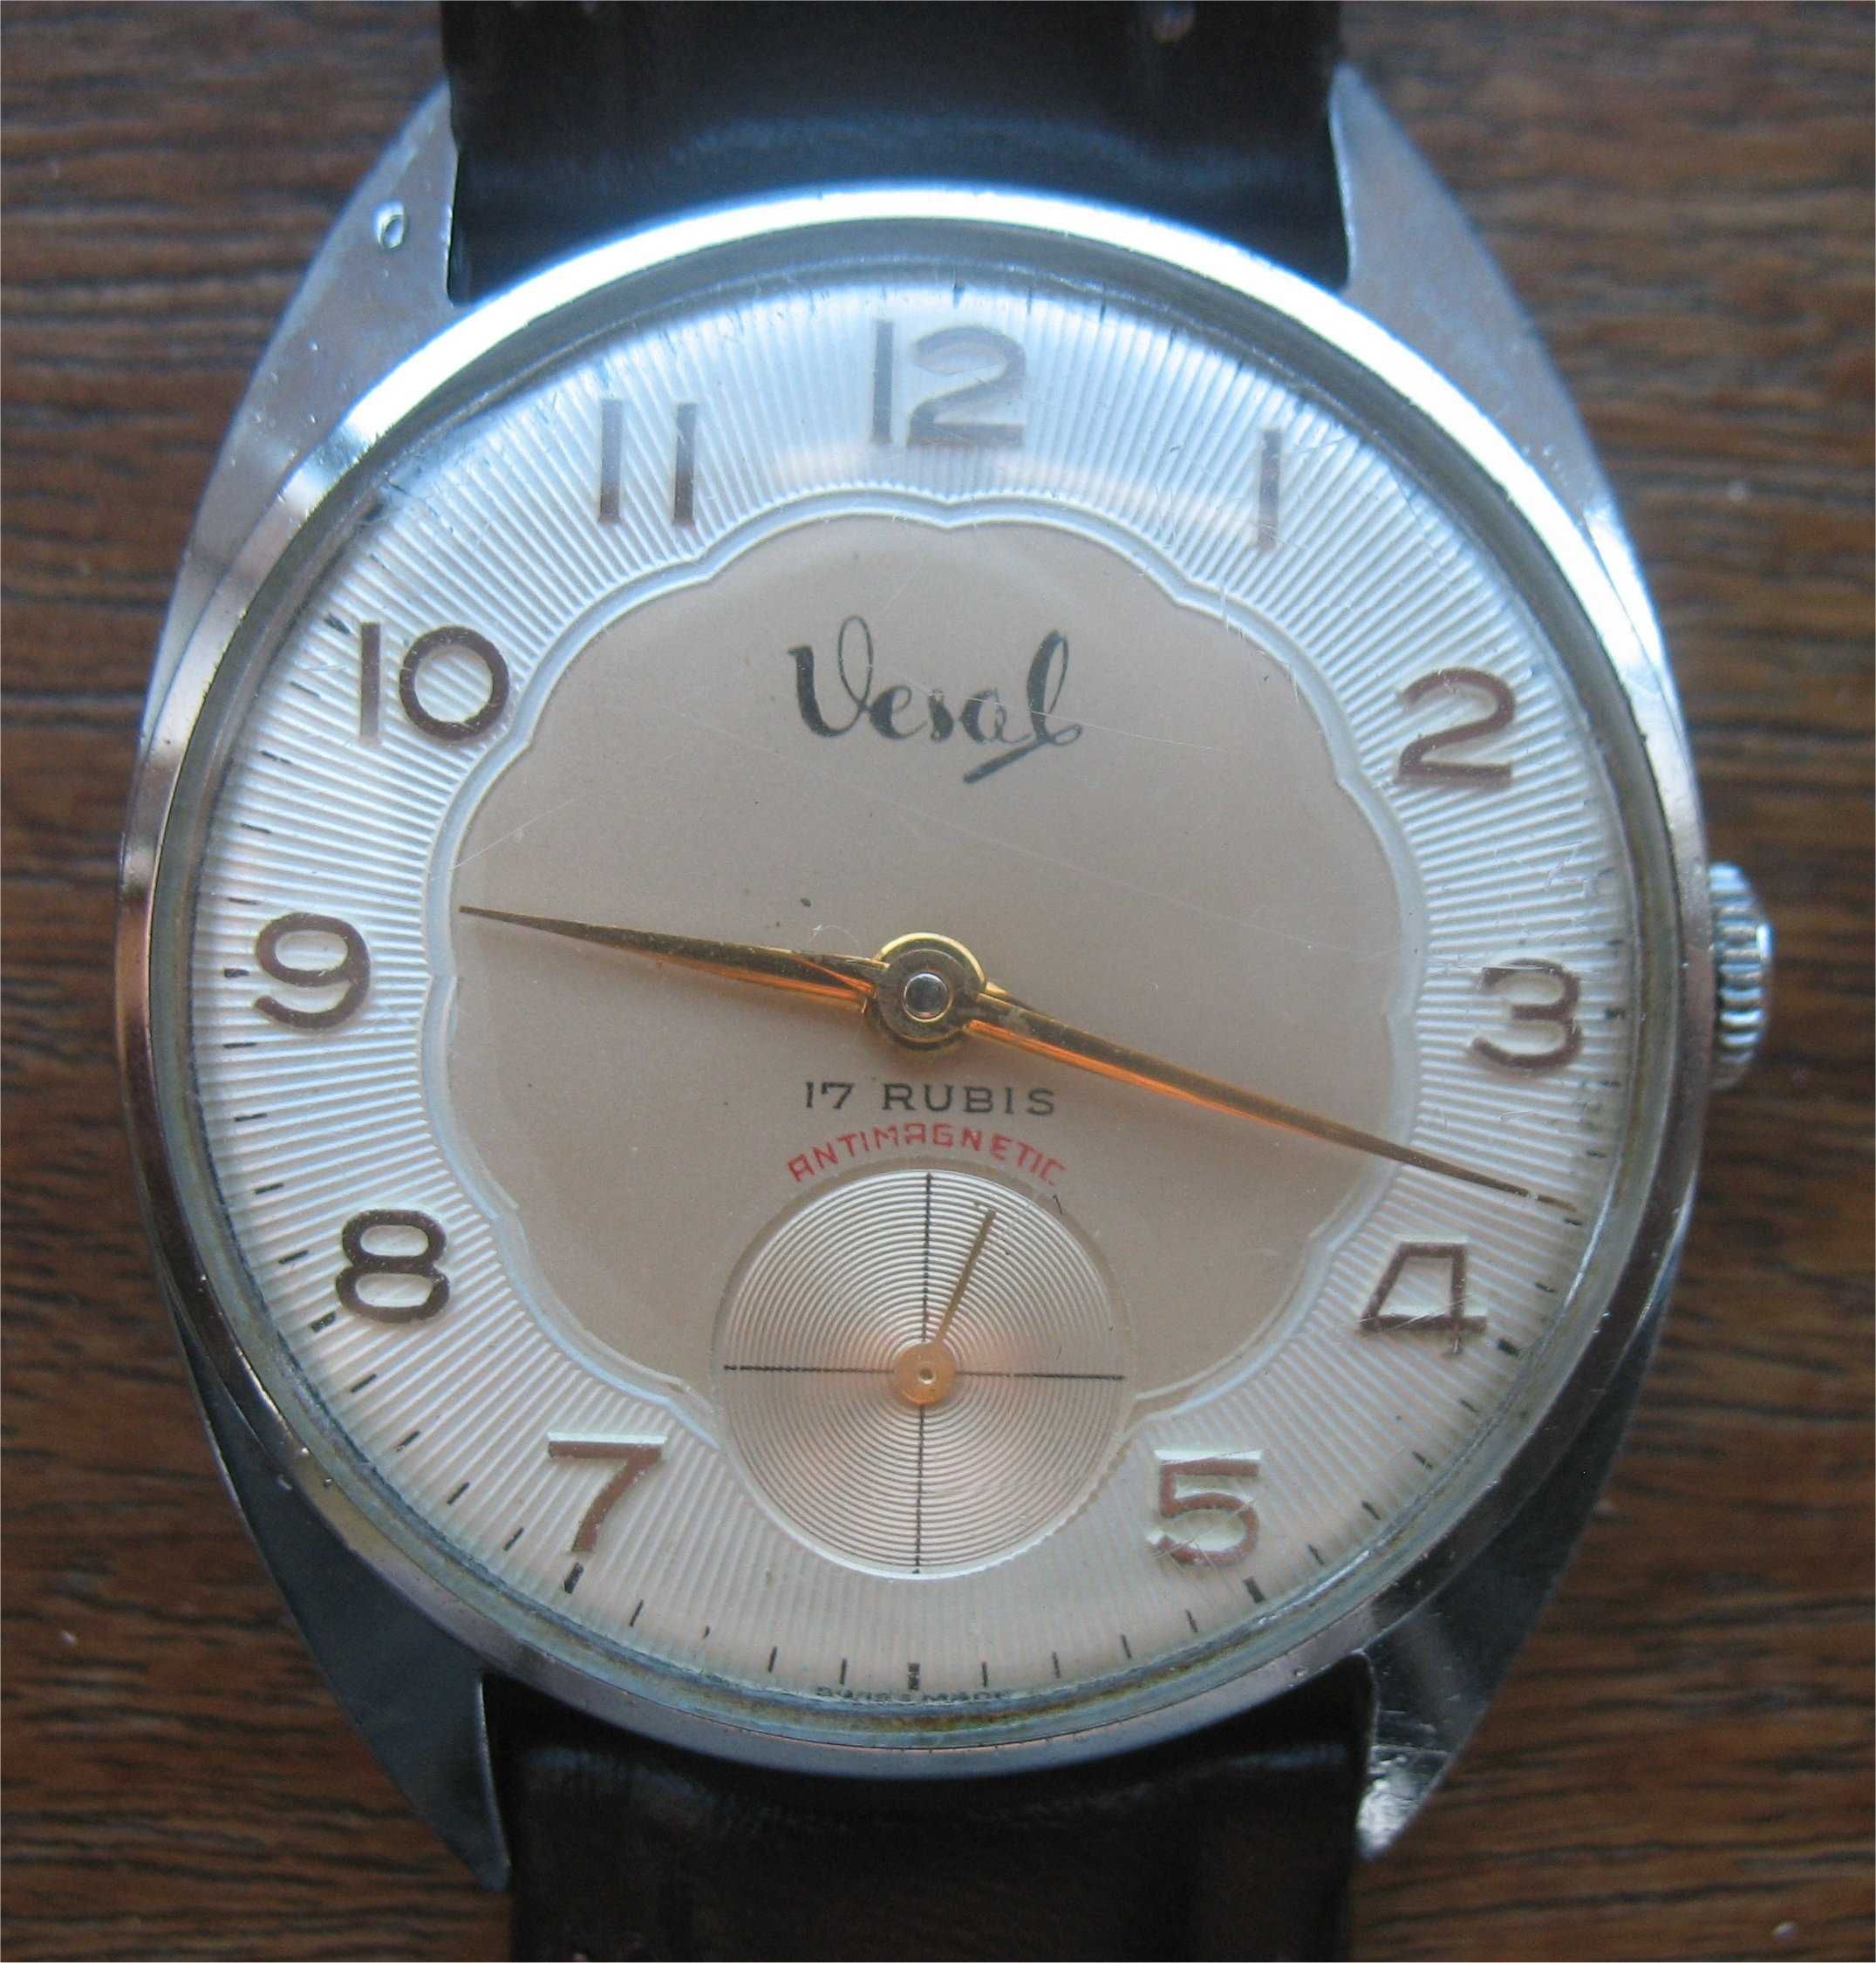 Relógio de corda Vintage - Vesal - Antimagnetic - 17 Rubis- Swiss Made